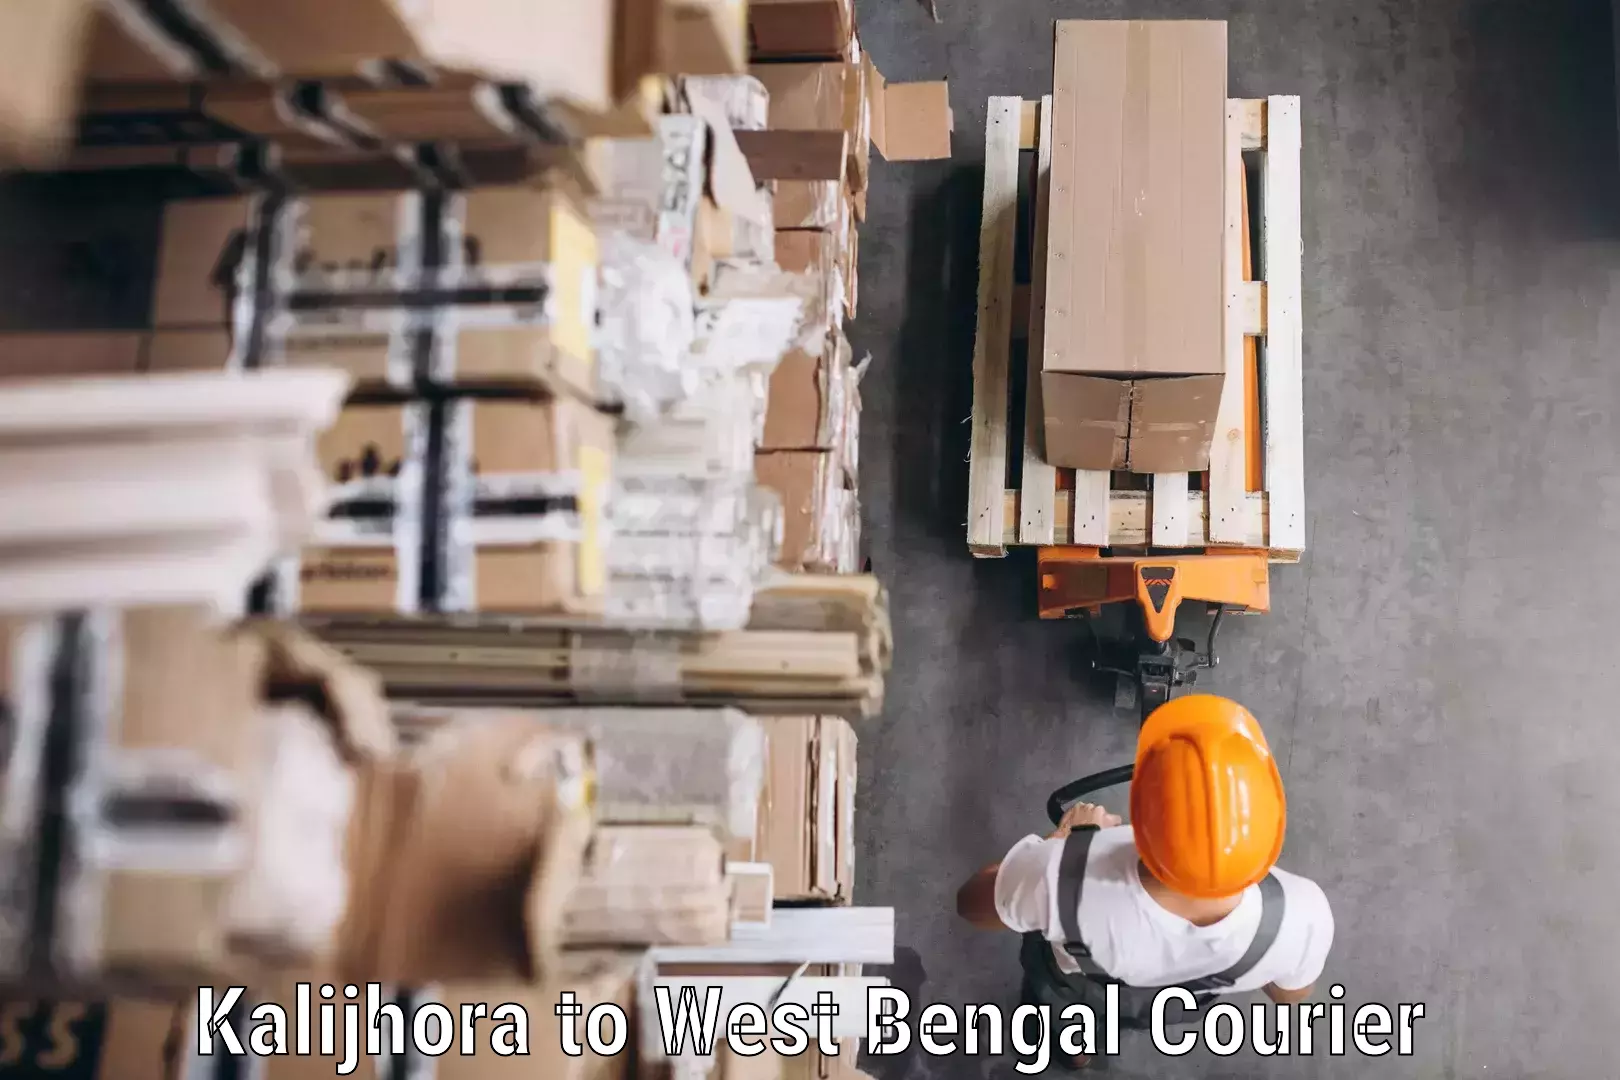 Courier service comparison Kalijhora to West Bengal